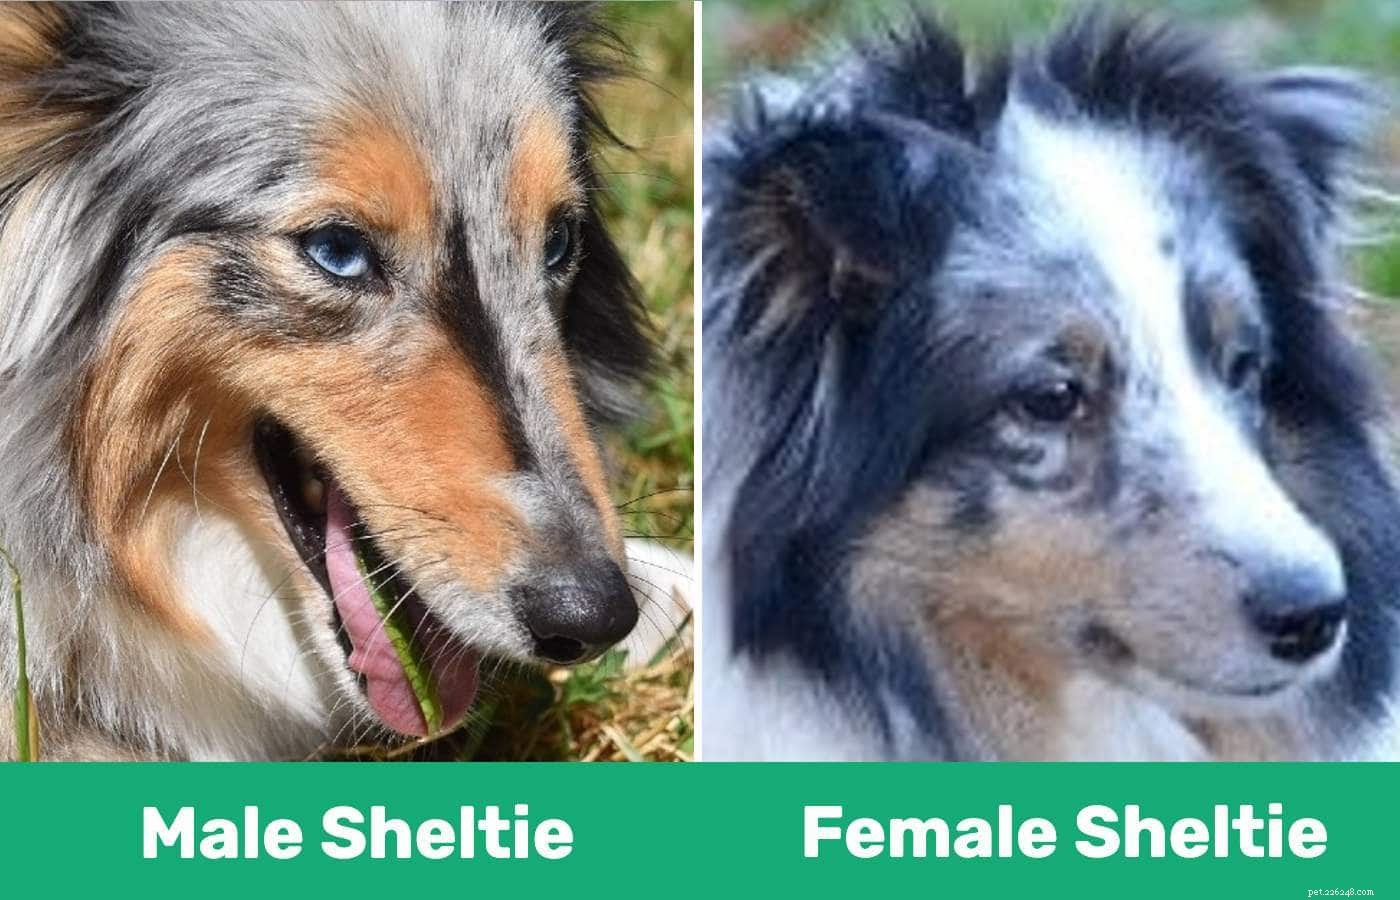 Cani da pastore Shetland maschi e femmine (Shelties):quali sono le differenze?